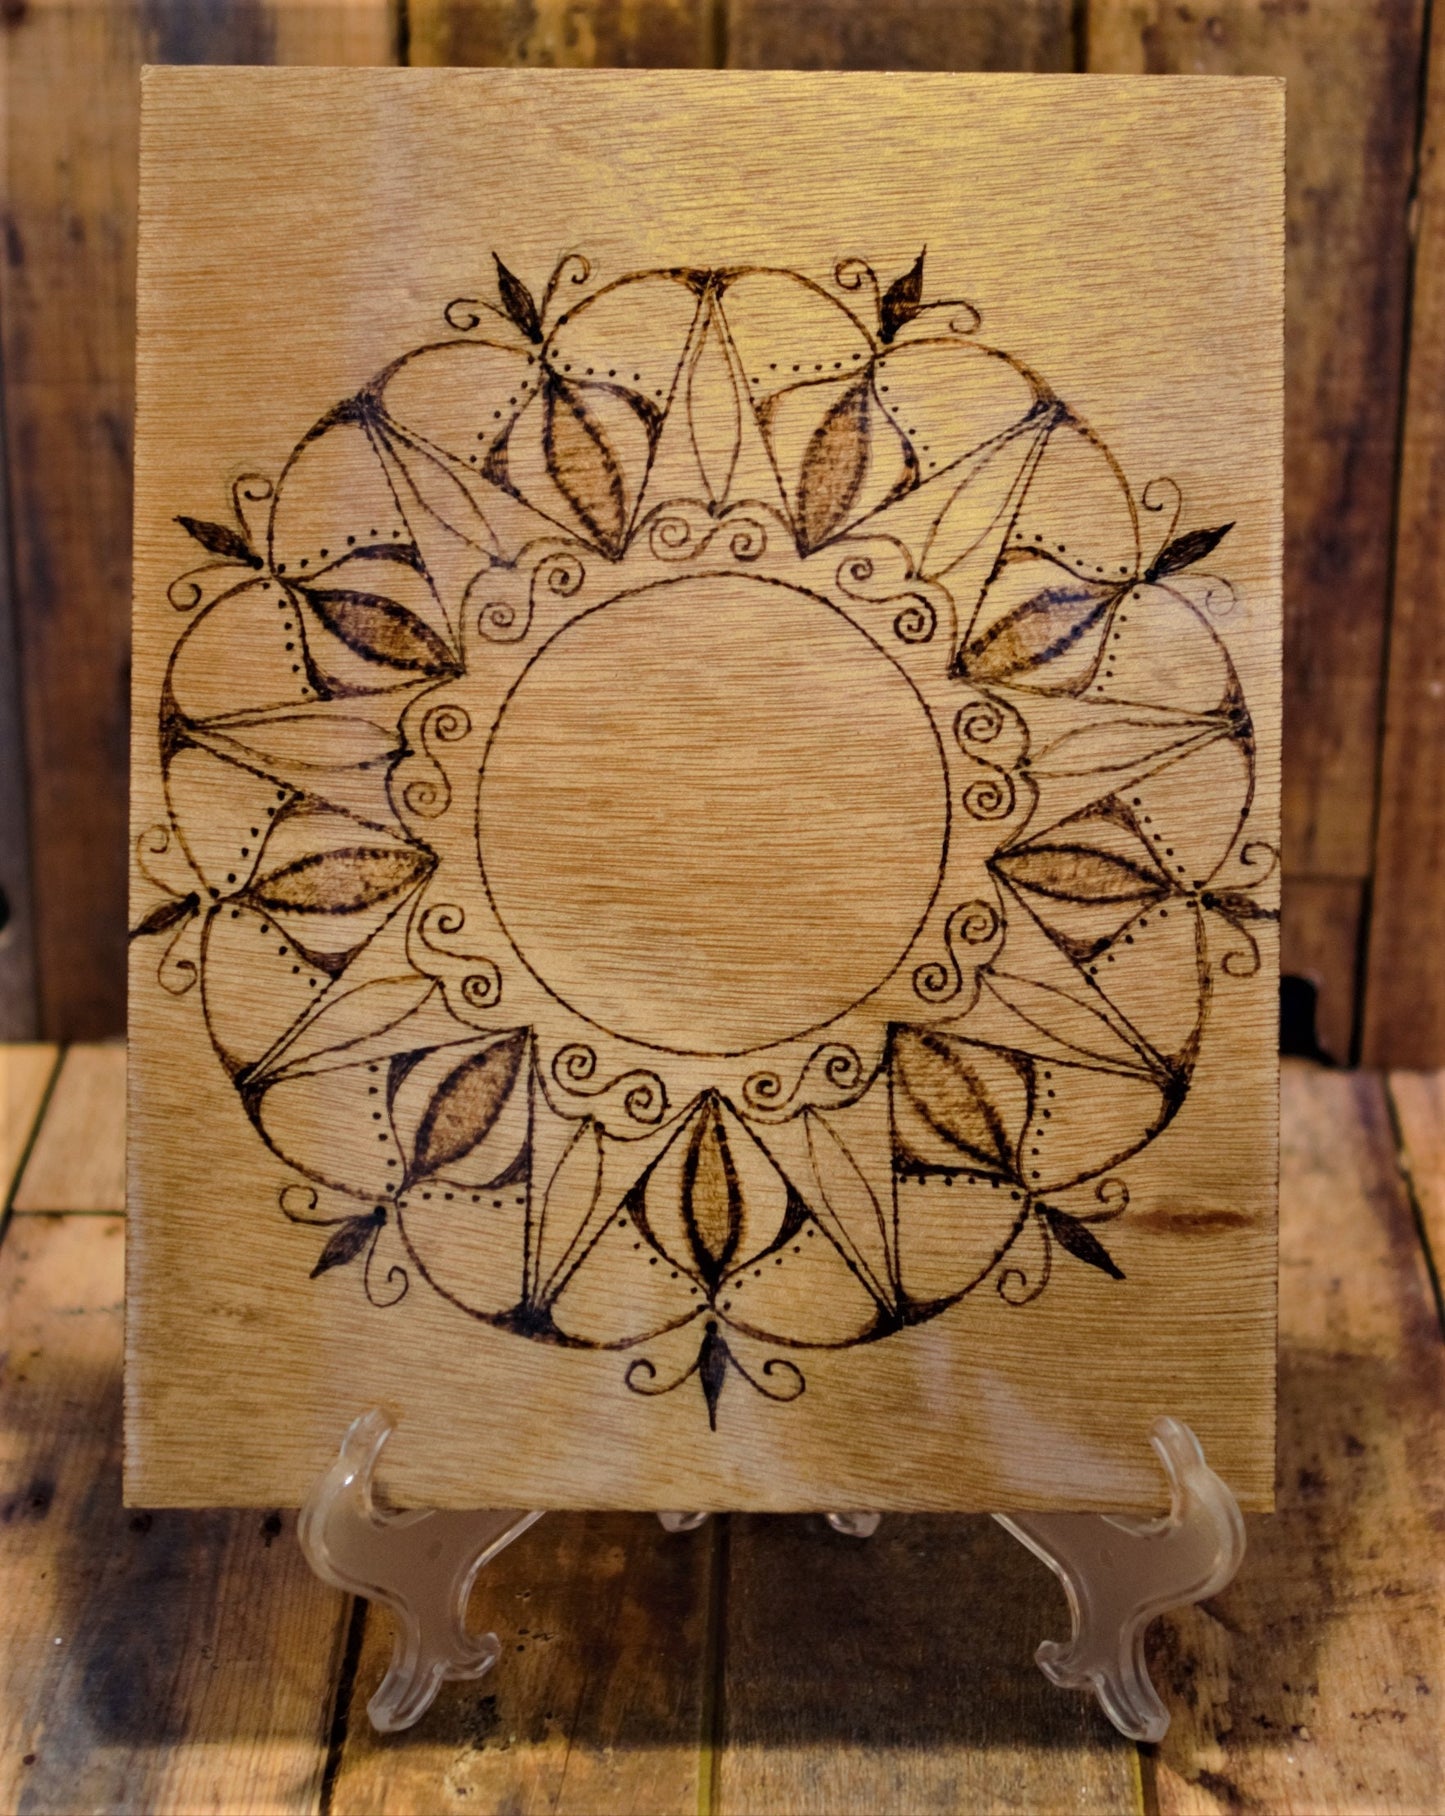 Mandala - Hand-Crafted Wood burning (Pyrography) on Birch or Basswood